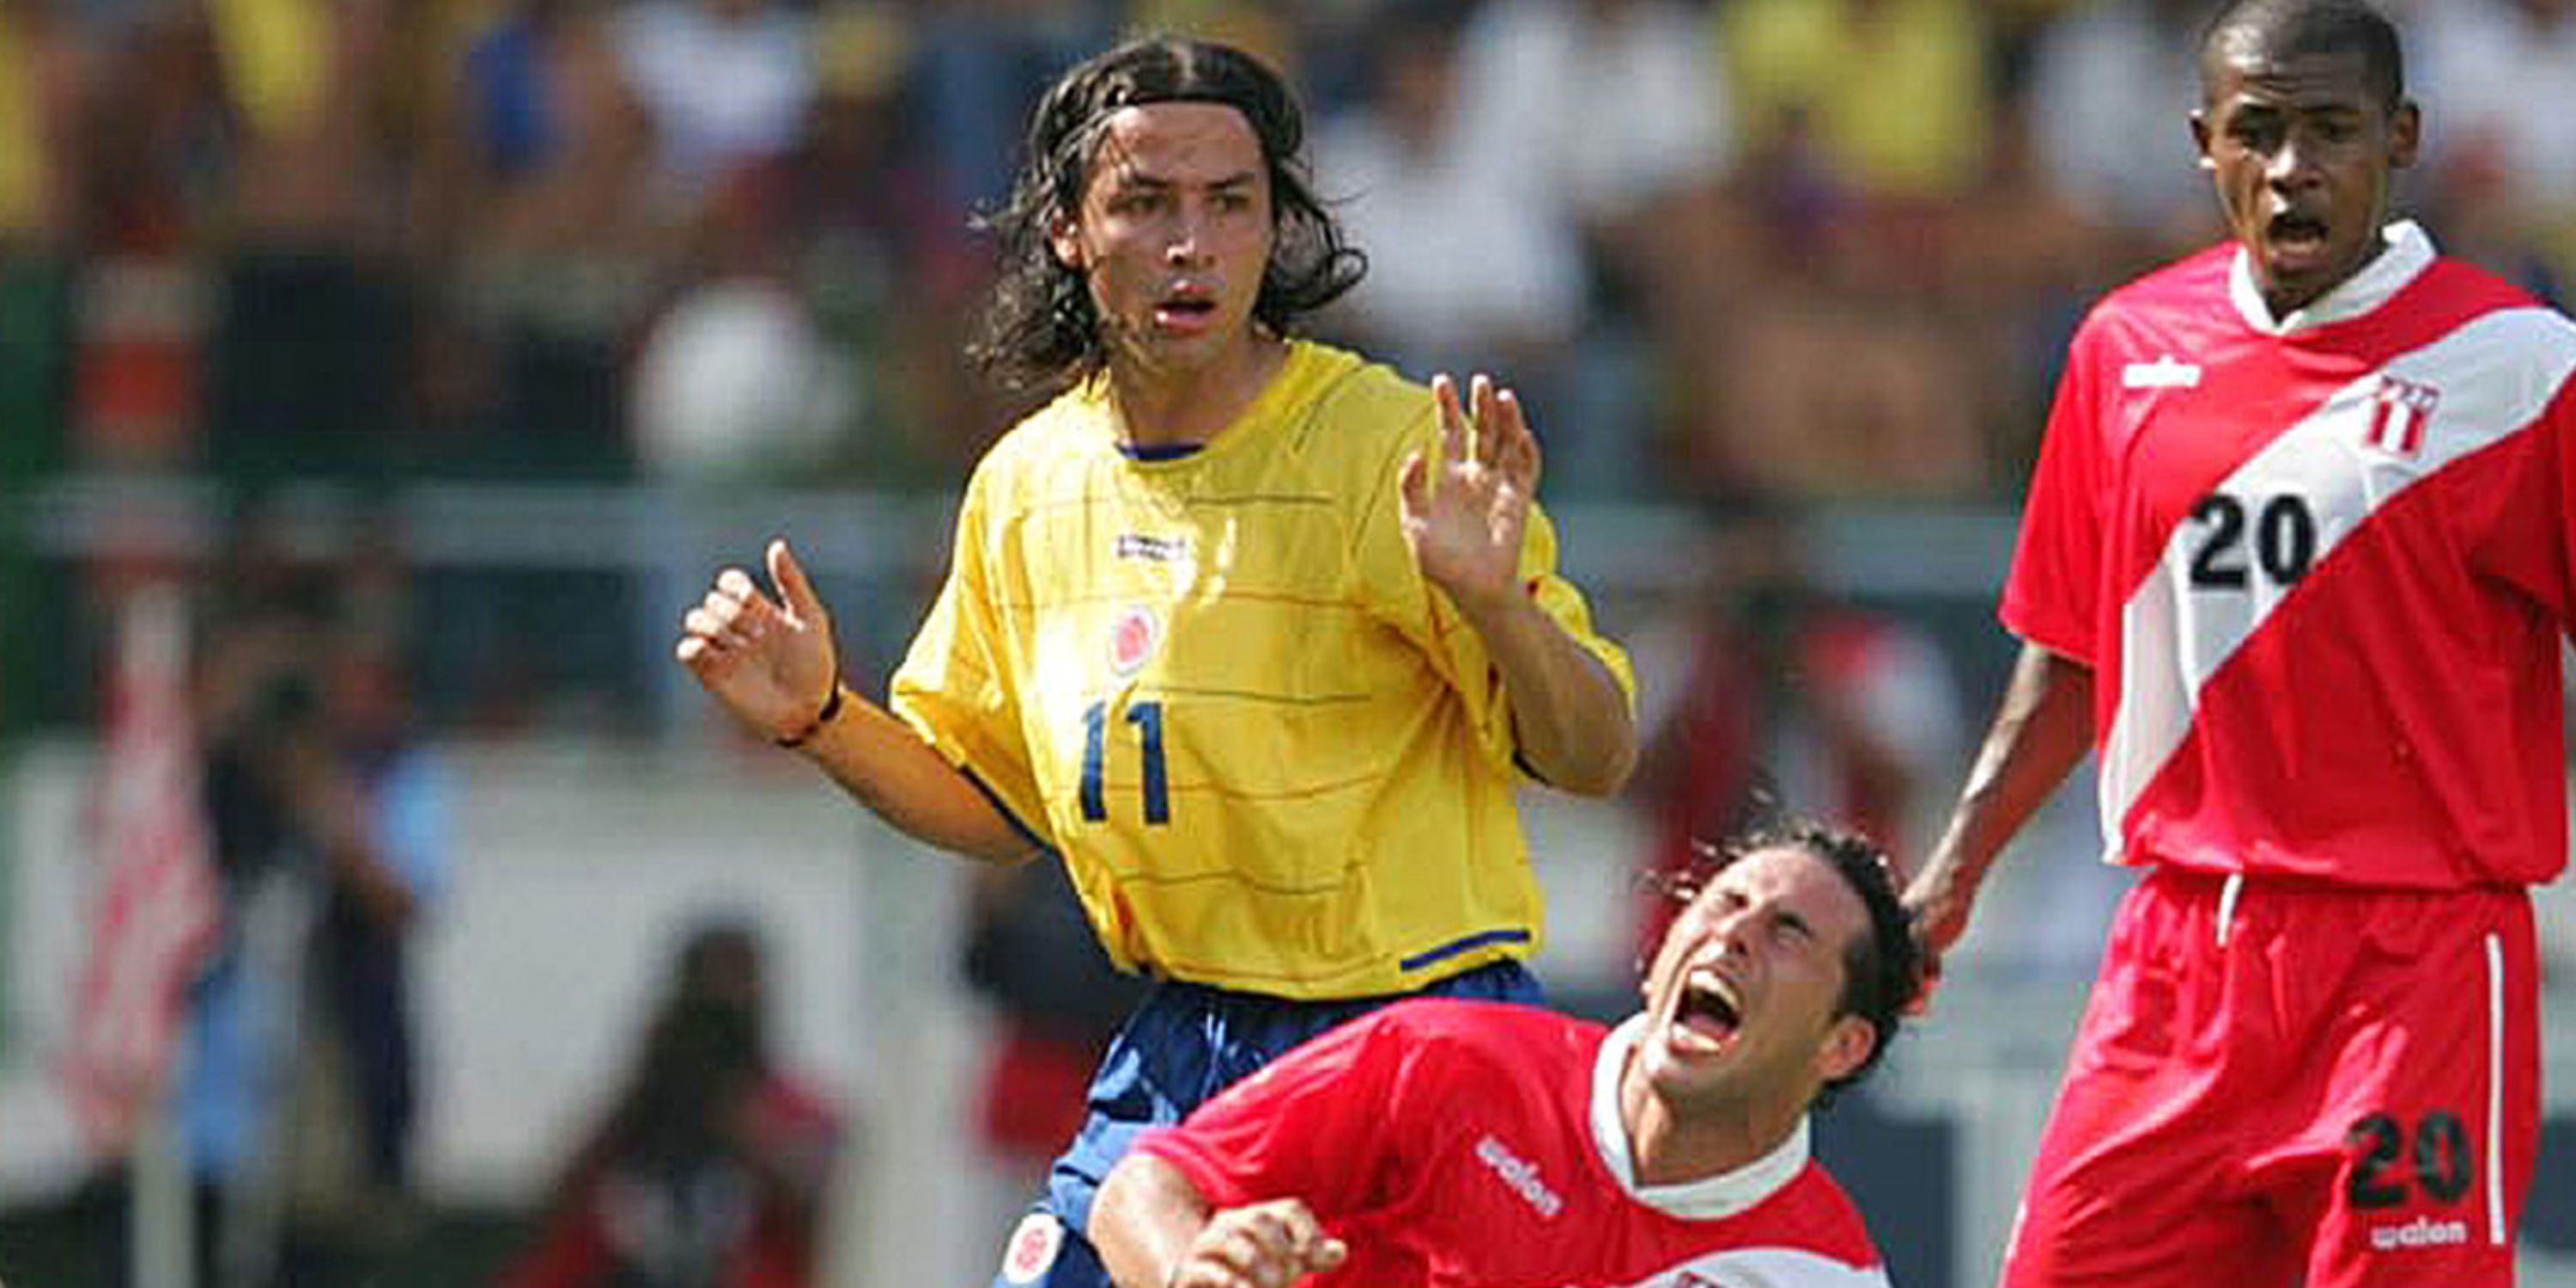 Gerardo Bedoya in action for Colombia